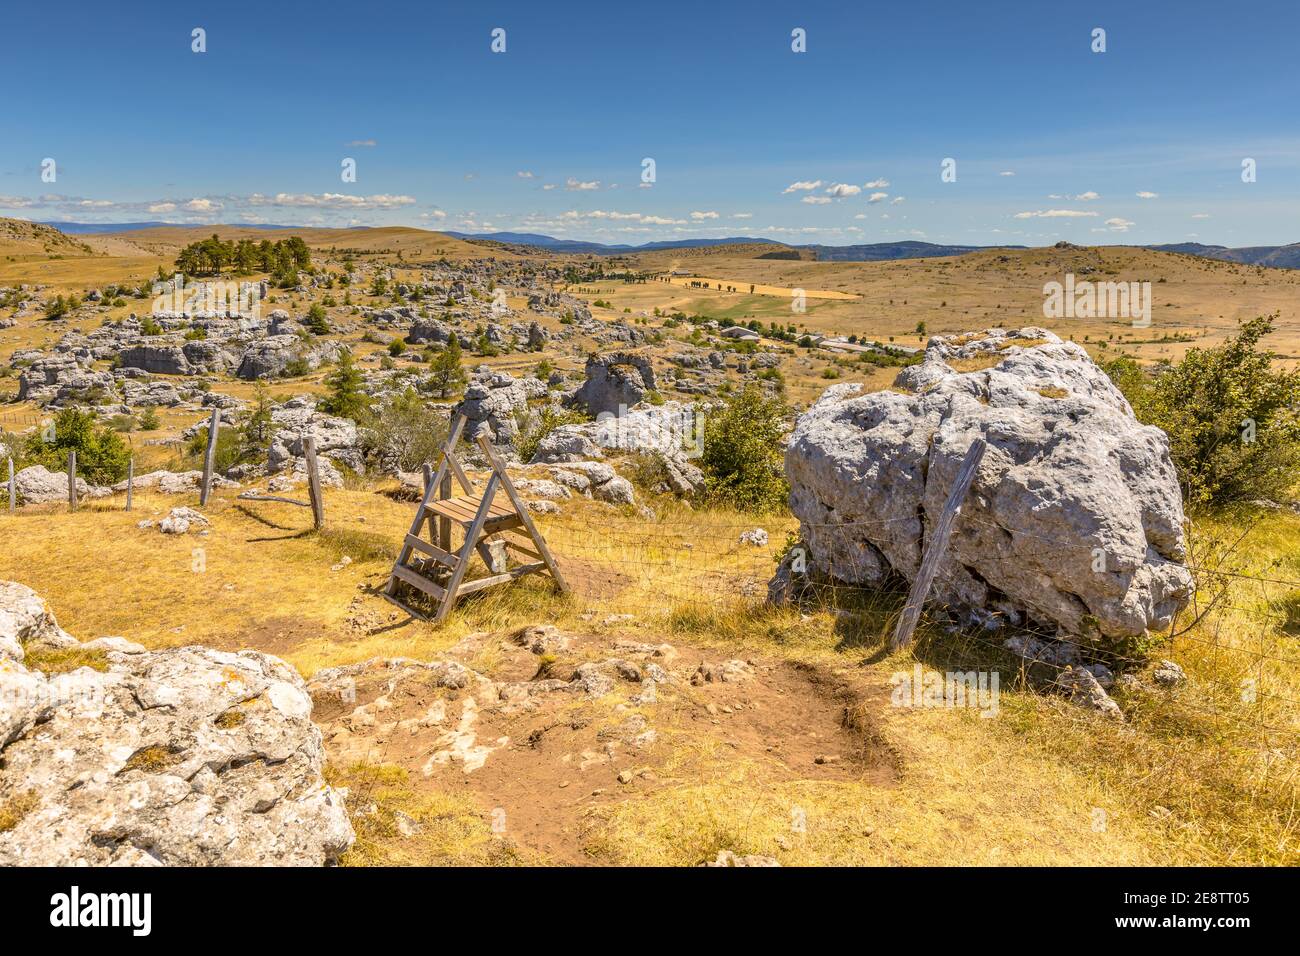 Chaos de Nîmes-le-Vieux rock formation on the limestone karst highland plateau of Causse Méjean, France Stock Photo